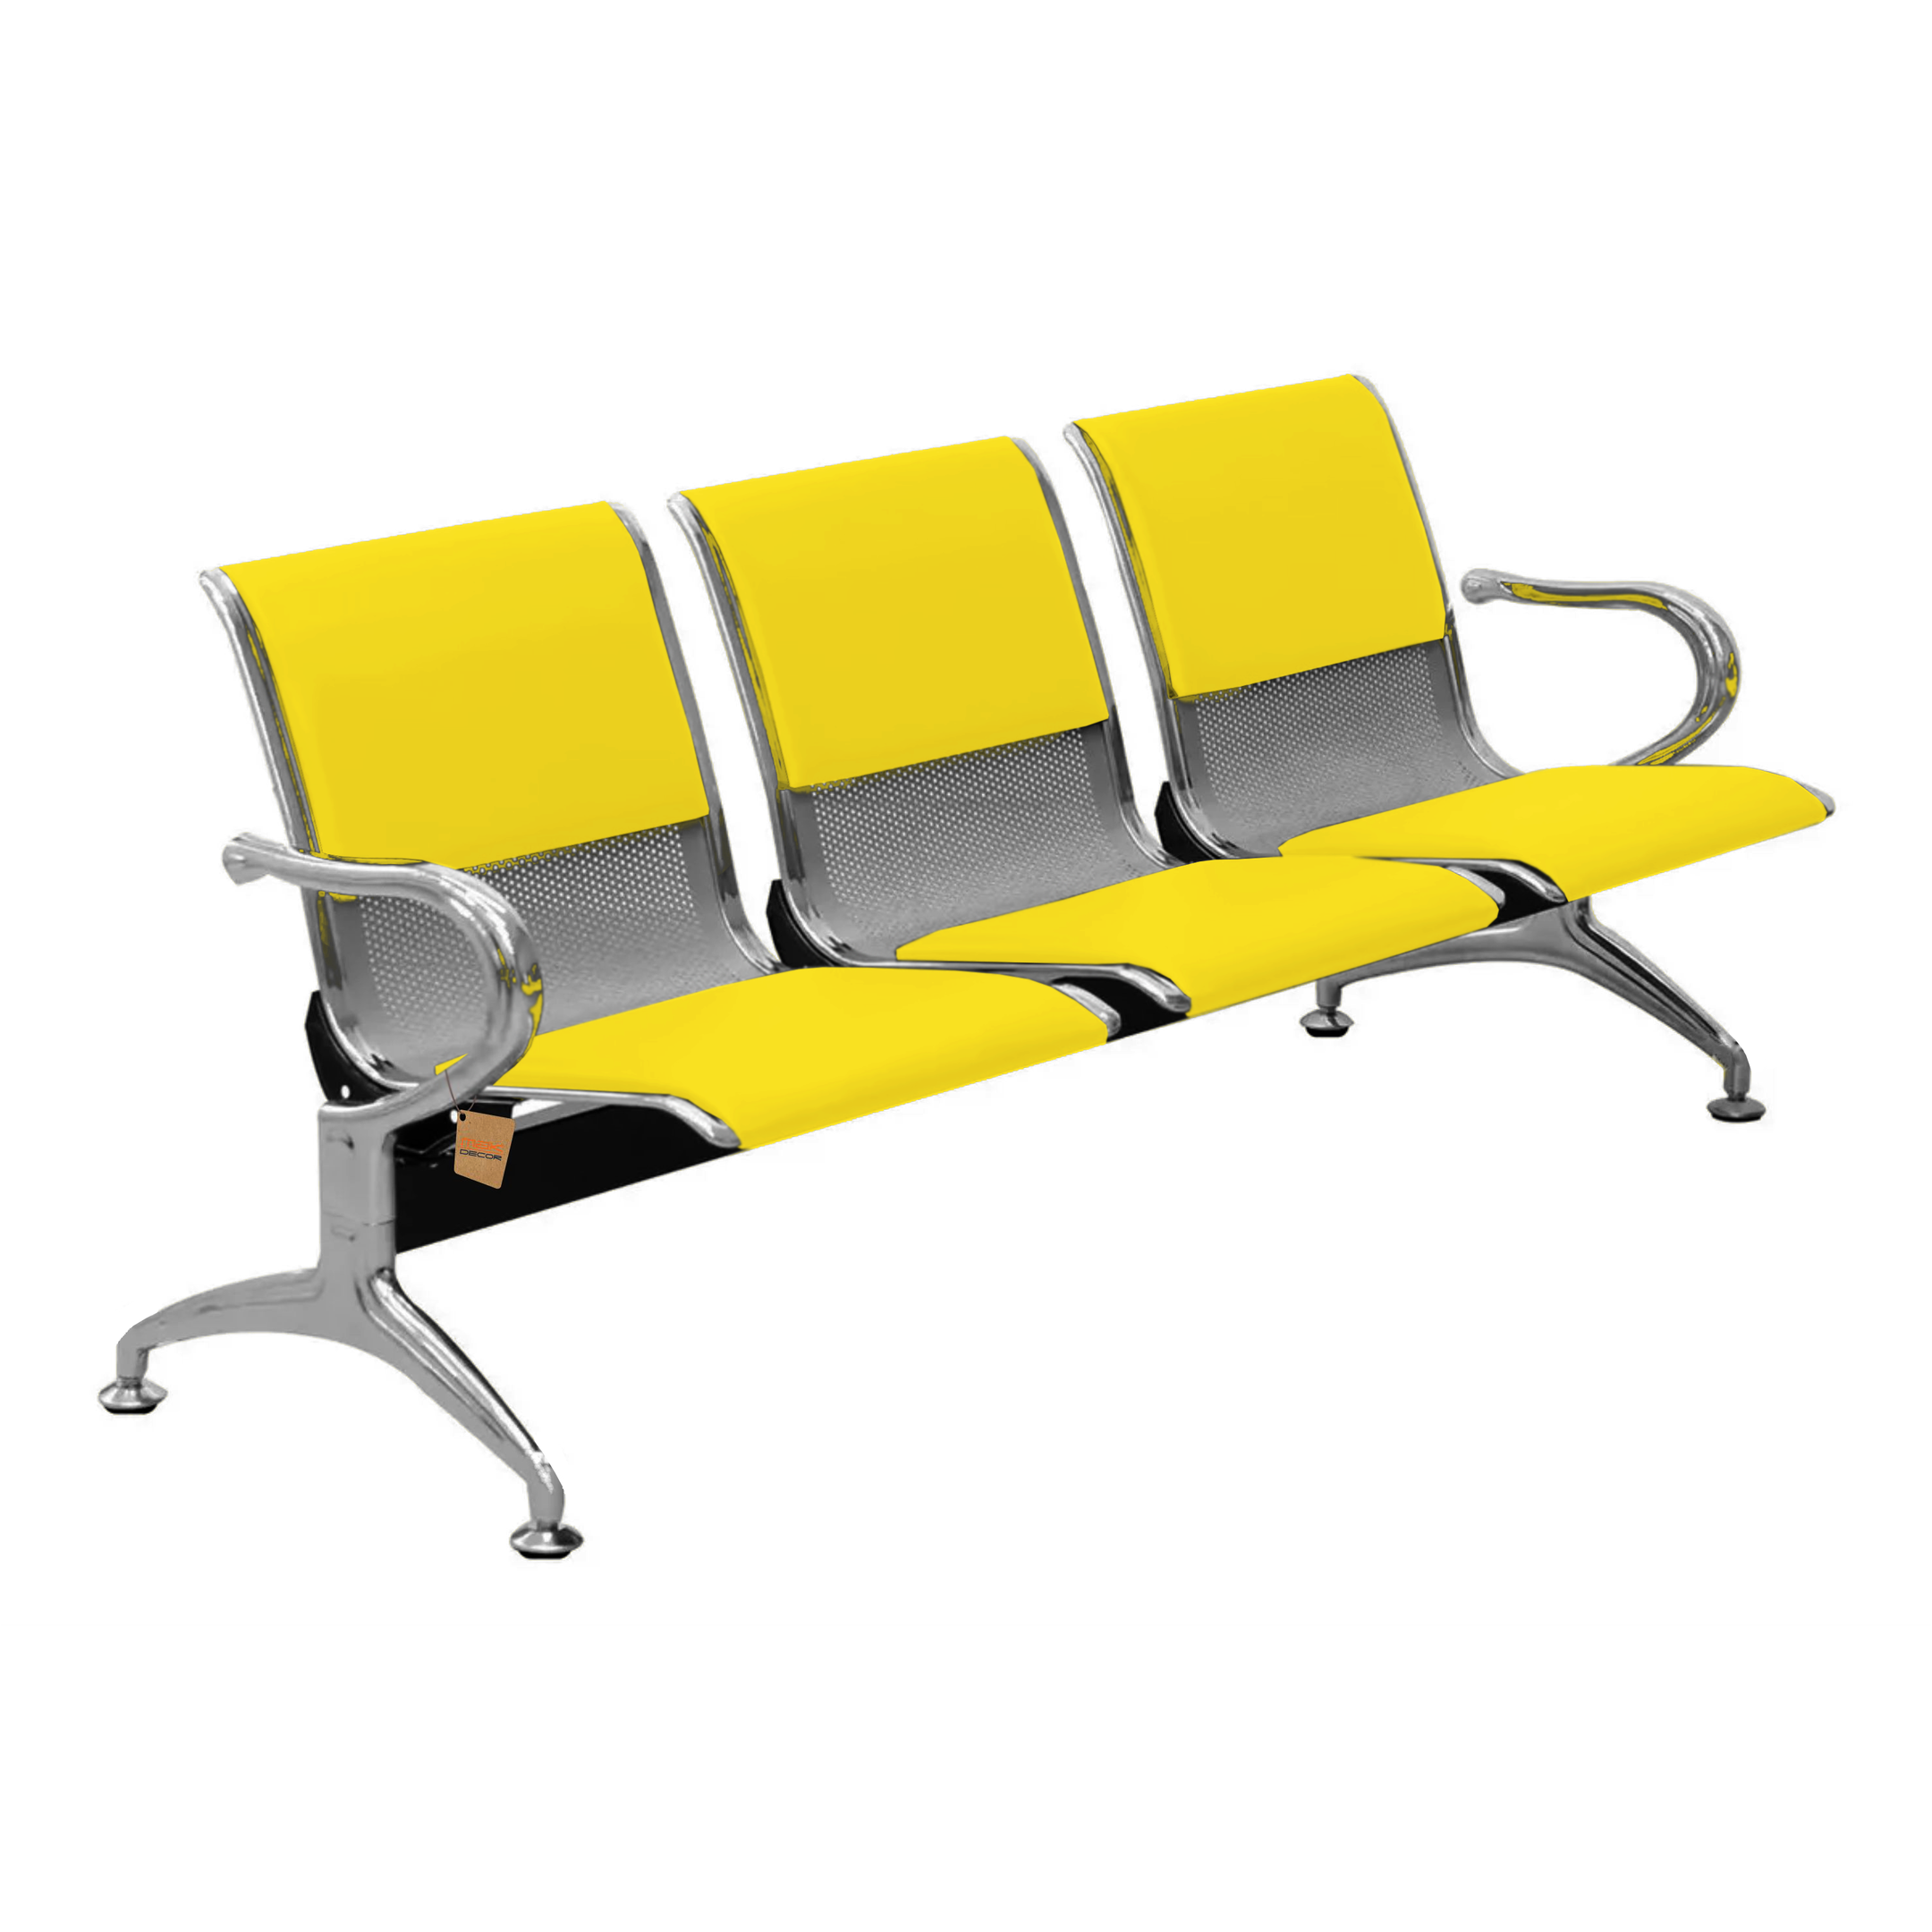 Cadeira Longarina 3 Lugares Cromada C/ Estofado Colors:Amarelo